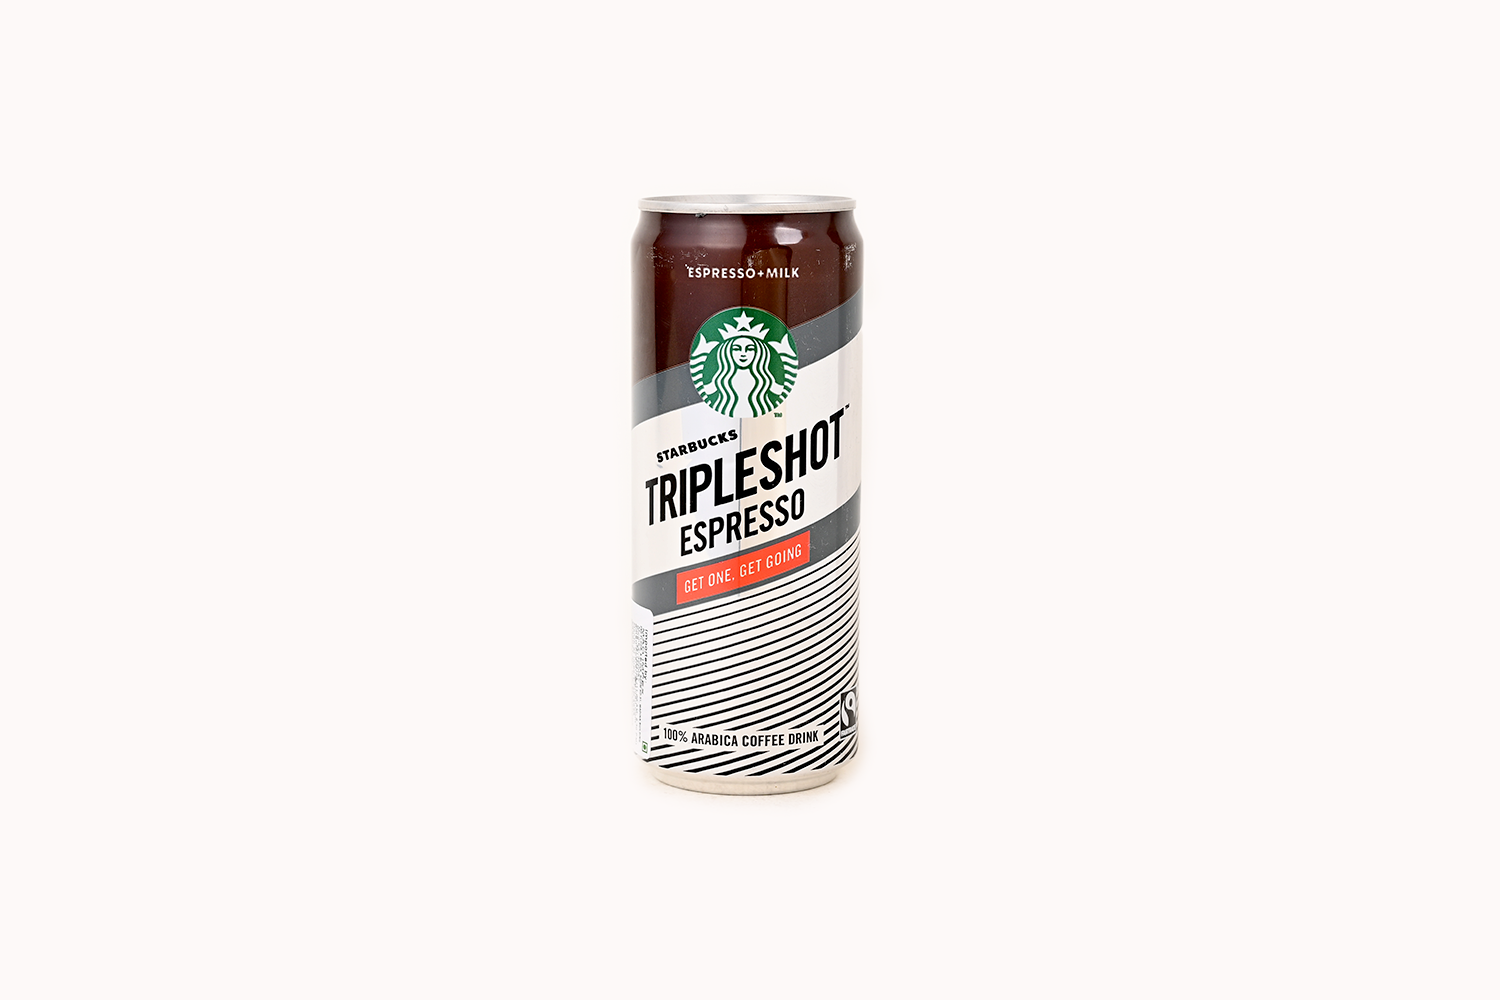 Starbucks Tripleshot Espresso Cold Coffee